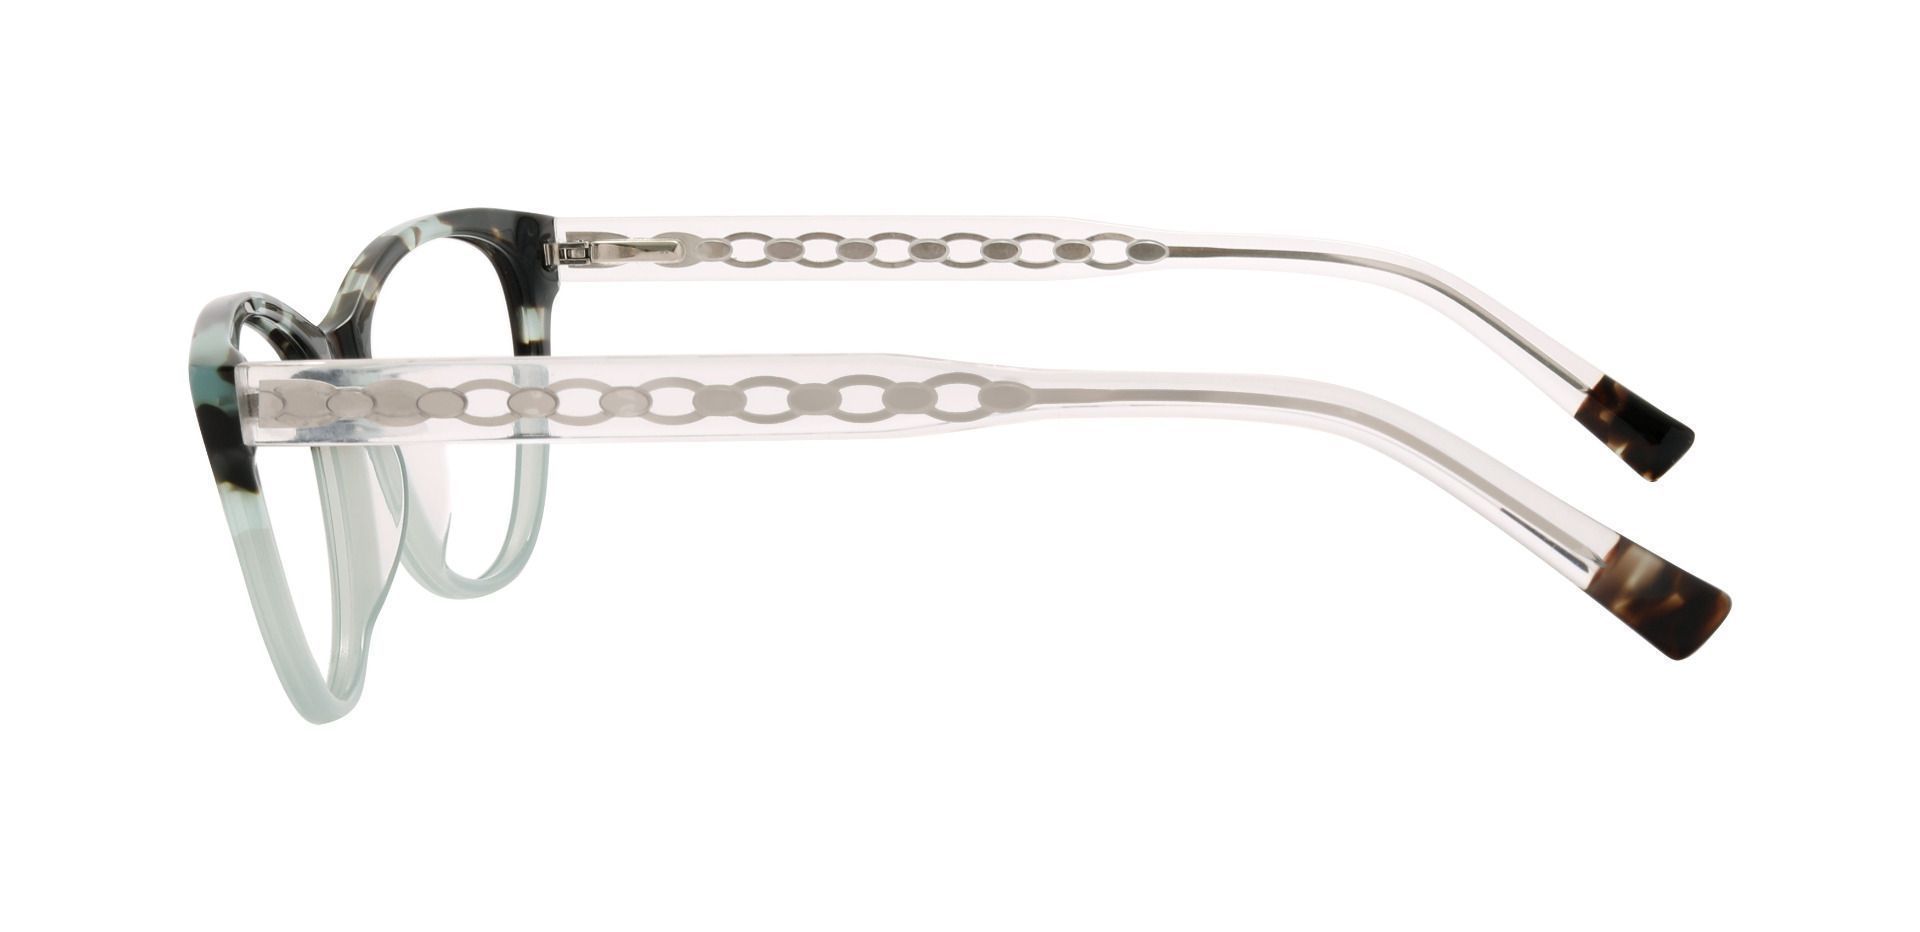 Knoxville Cat Eye Prescription Glasses - Two